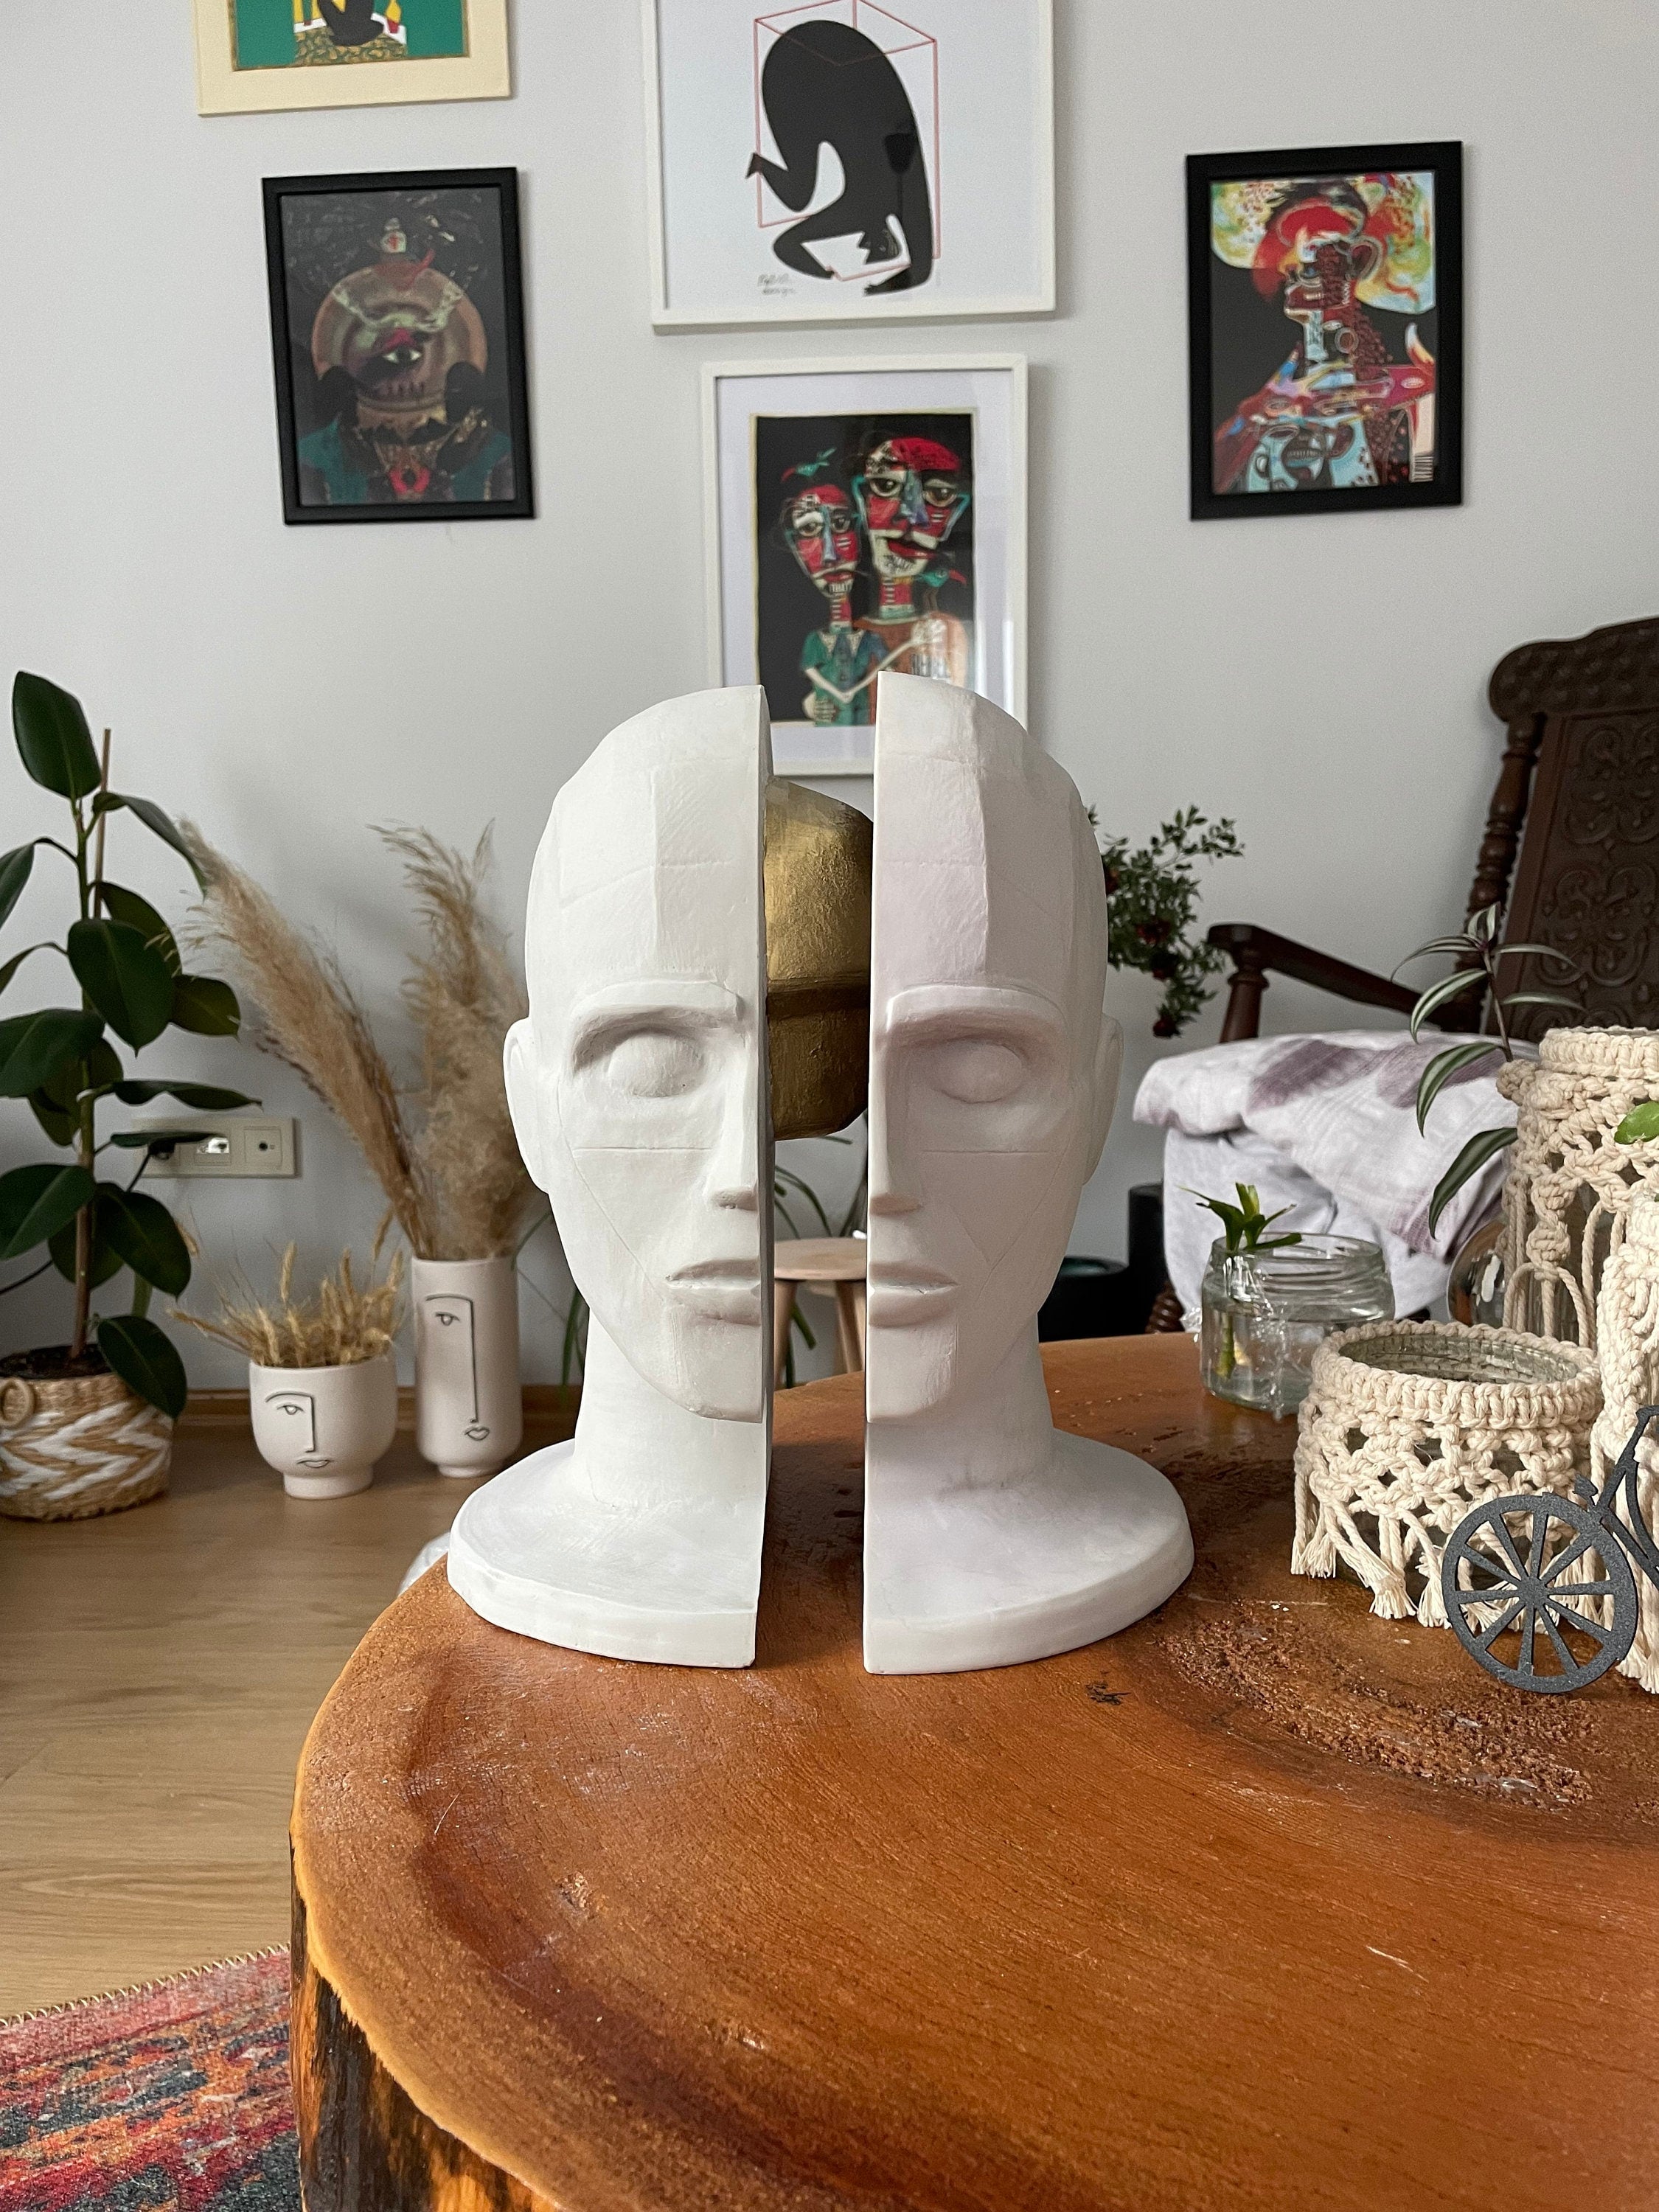 Golden Brain Sculpture Duo: Symbolizing Cognitive Harmony